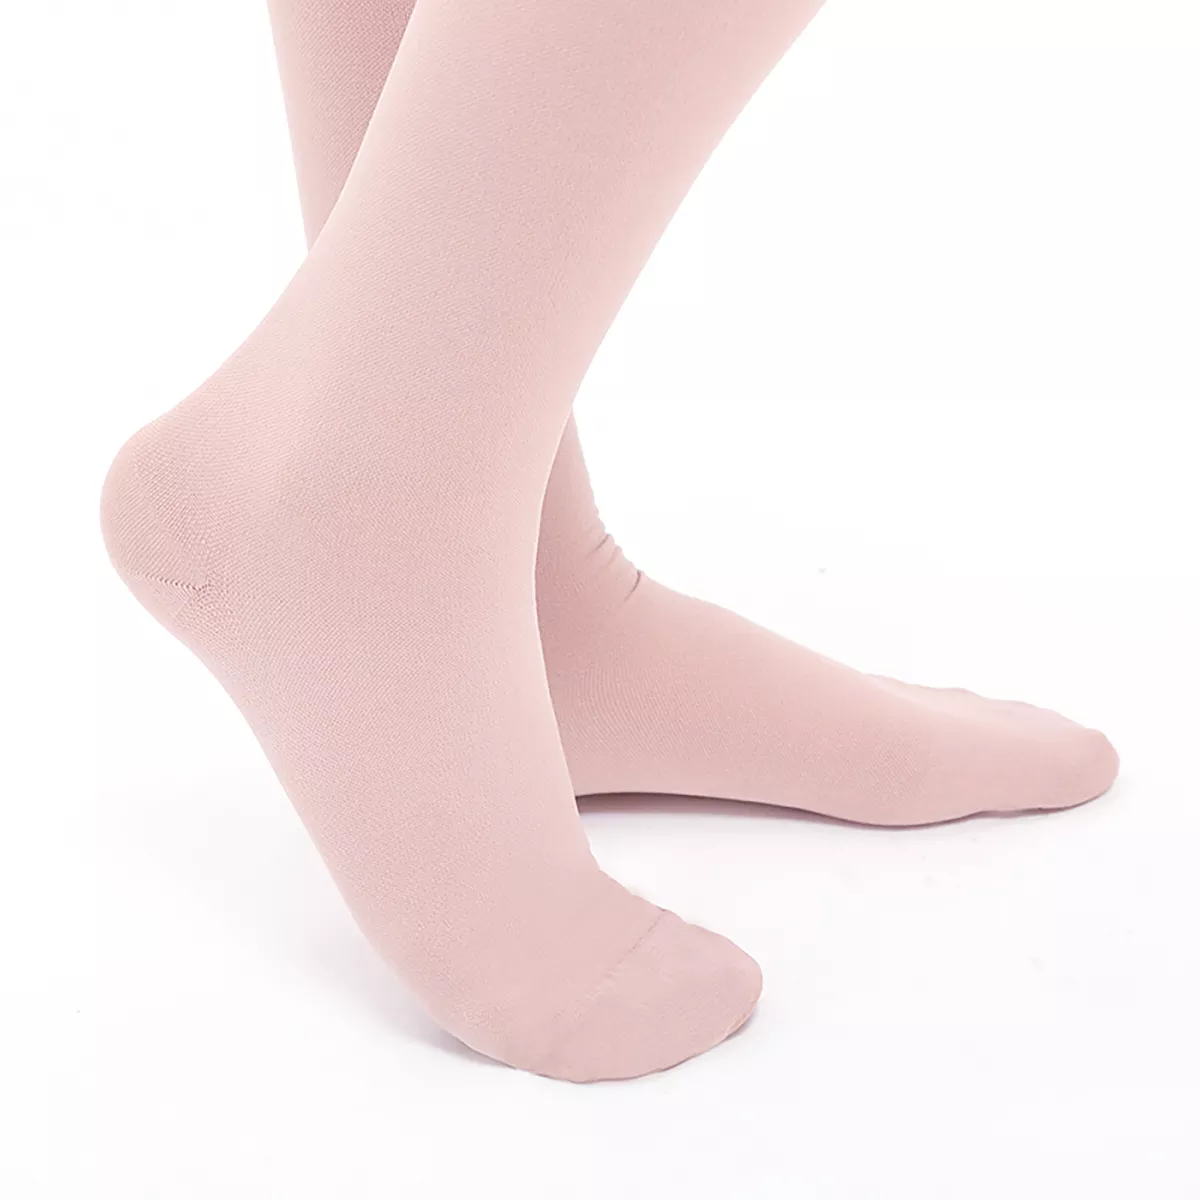 Varcoh ® 15-20 mmHg Men Thigh High Closed Toe Compression Socks Beige